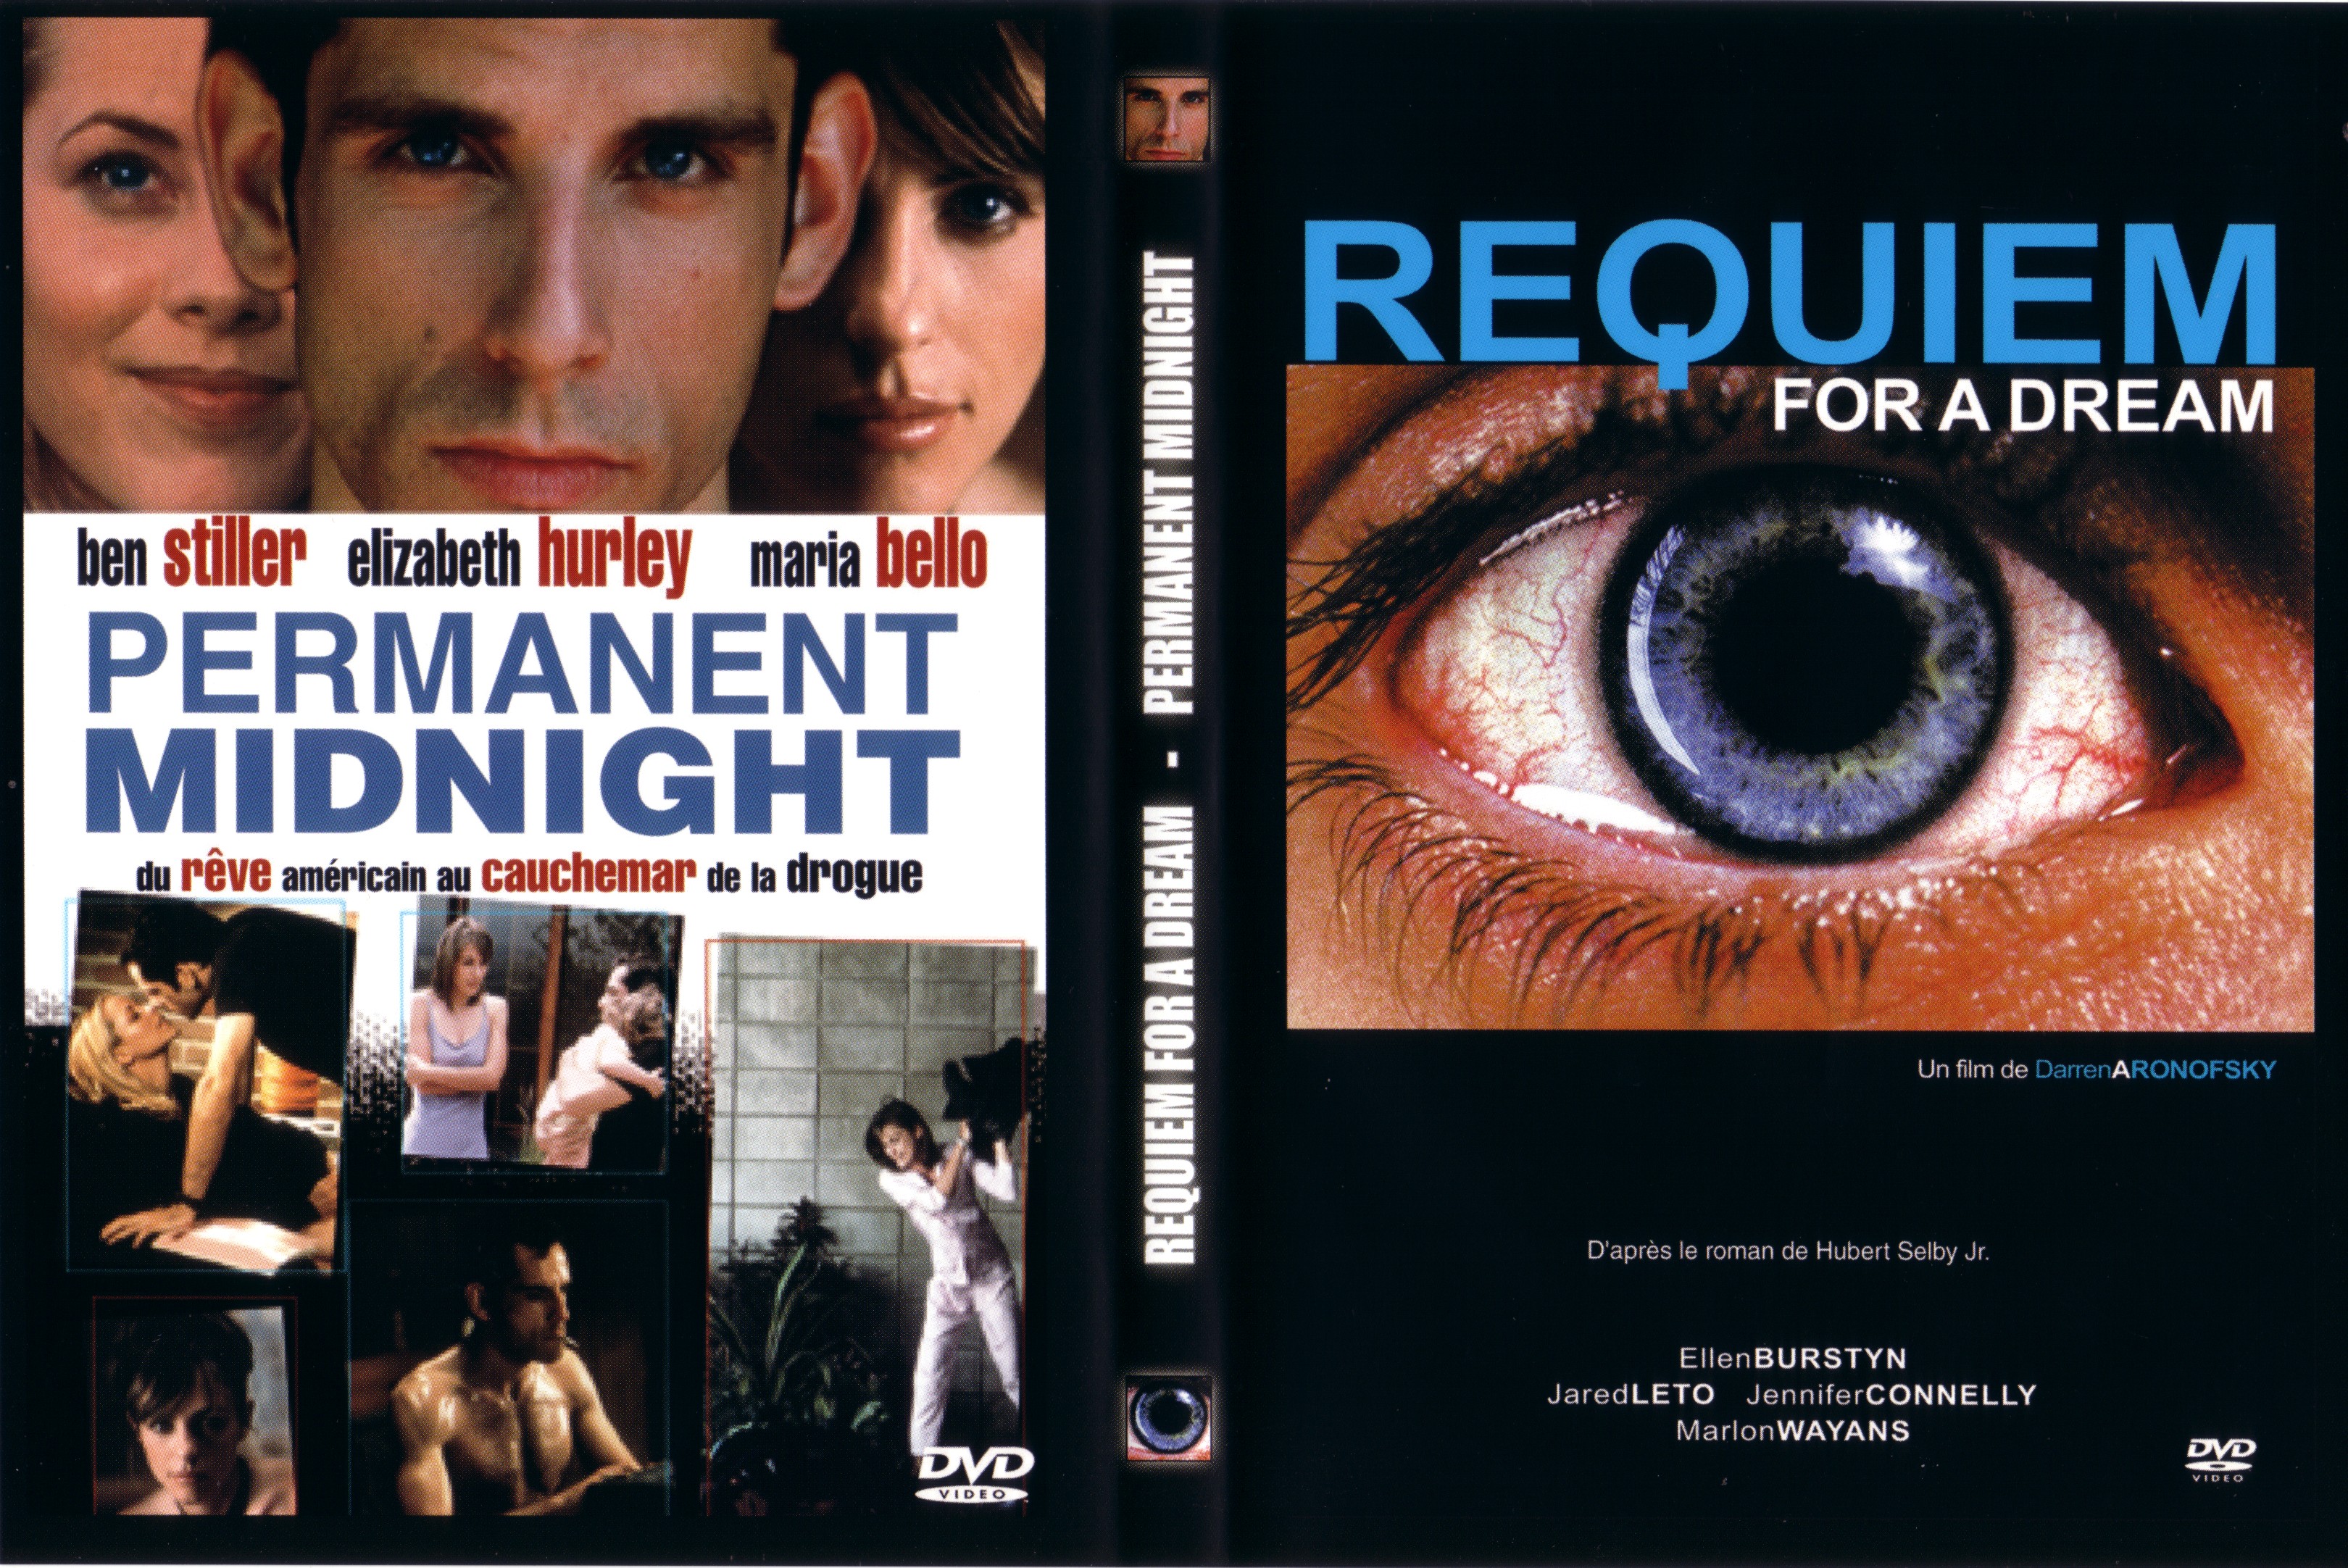 Jaquette DVD Requiem for a dream + Permanent midnight